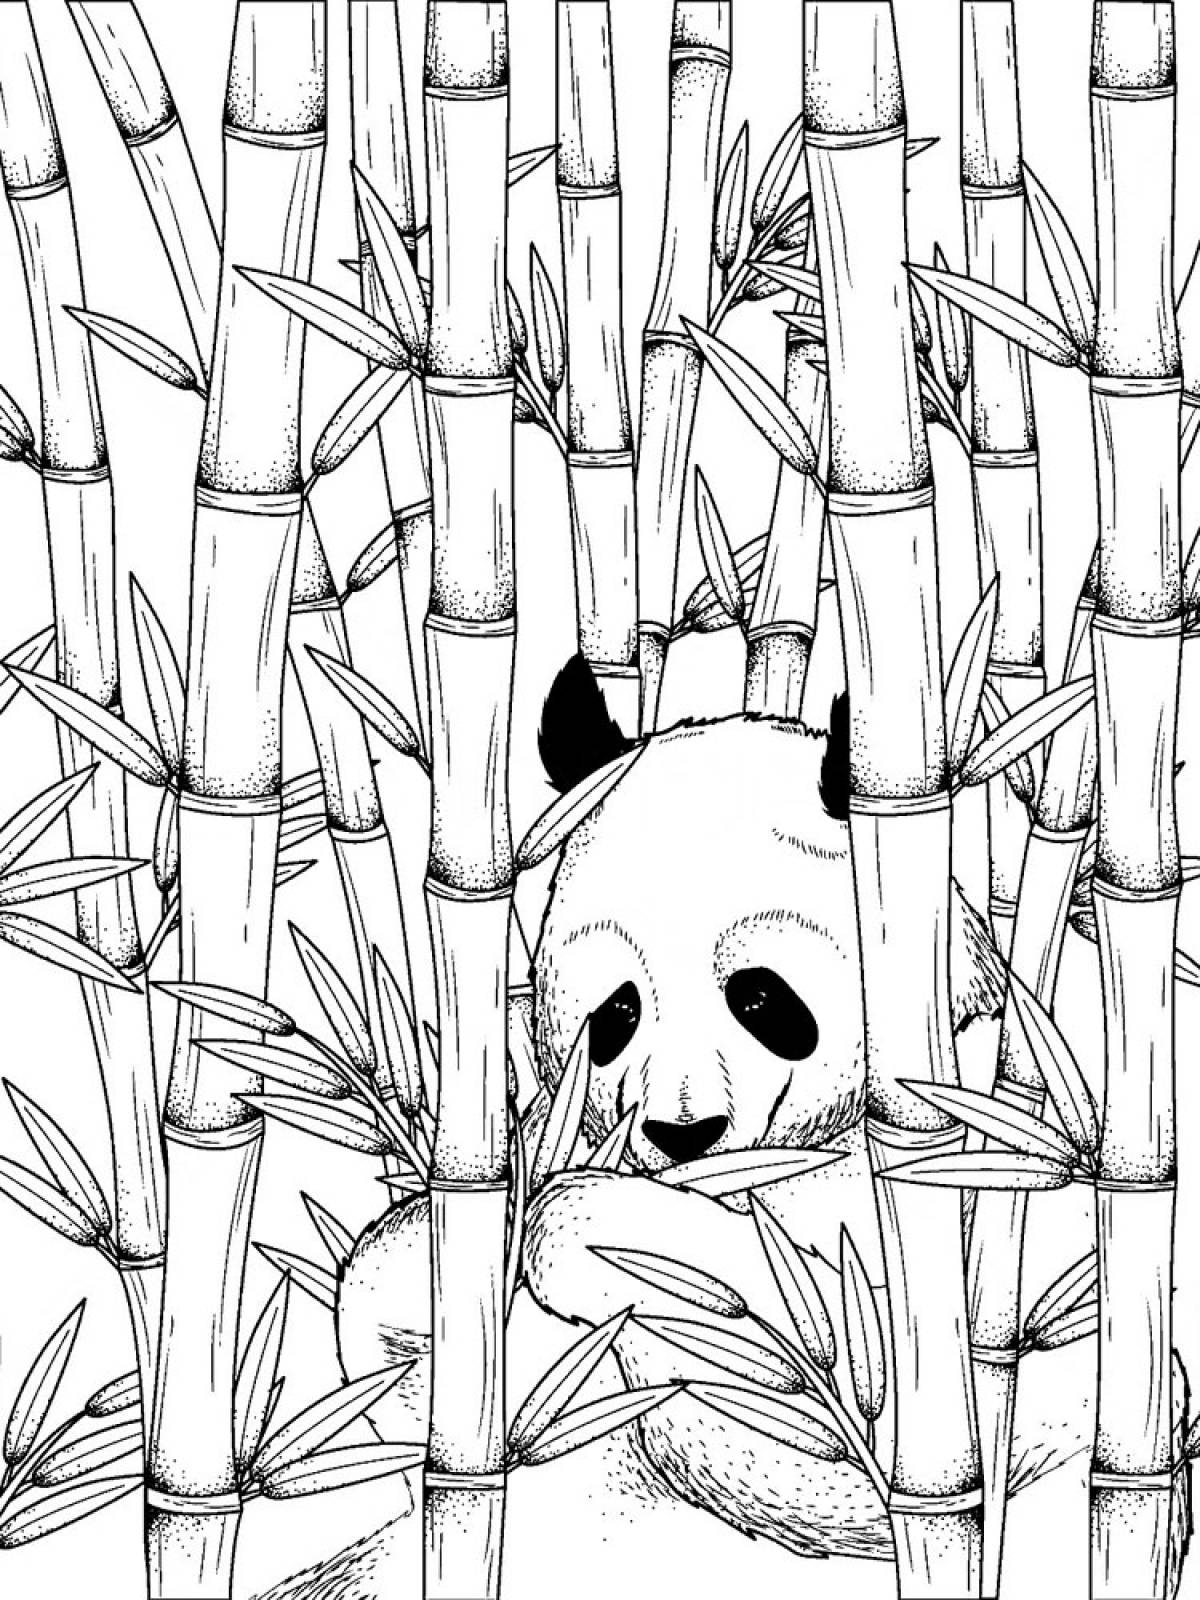 Бамбук и панда